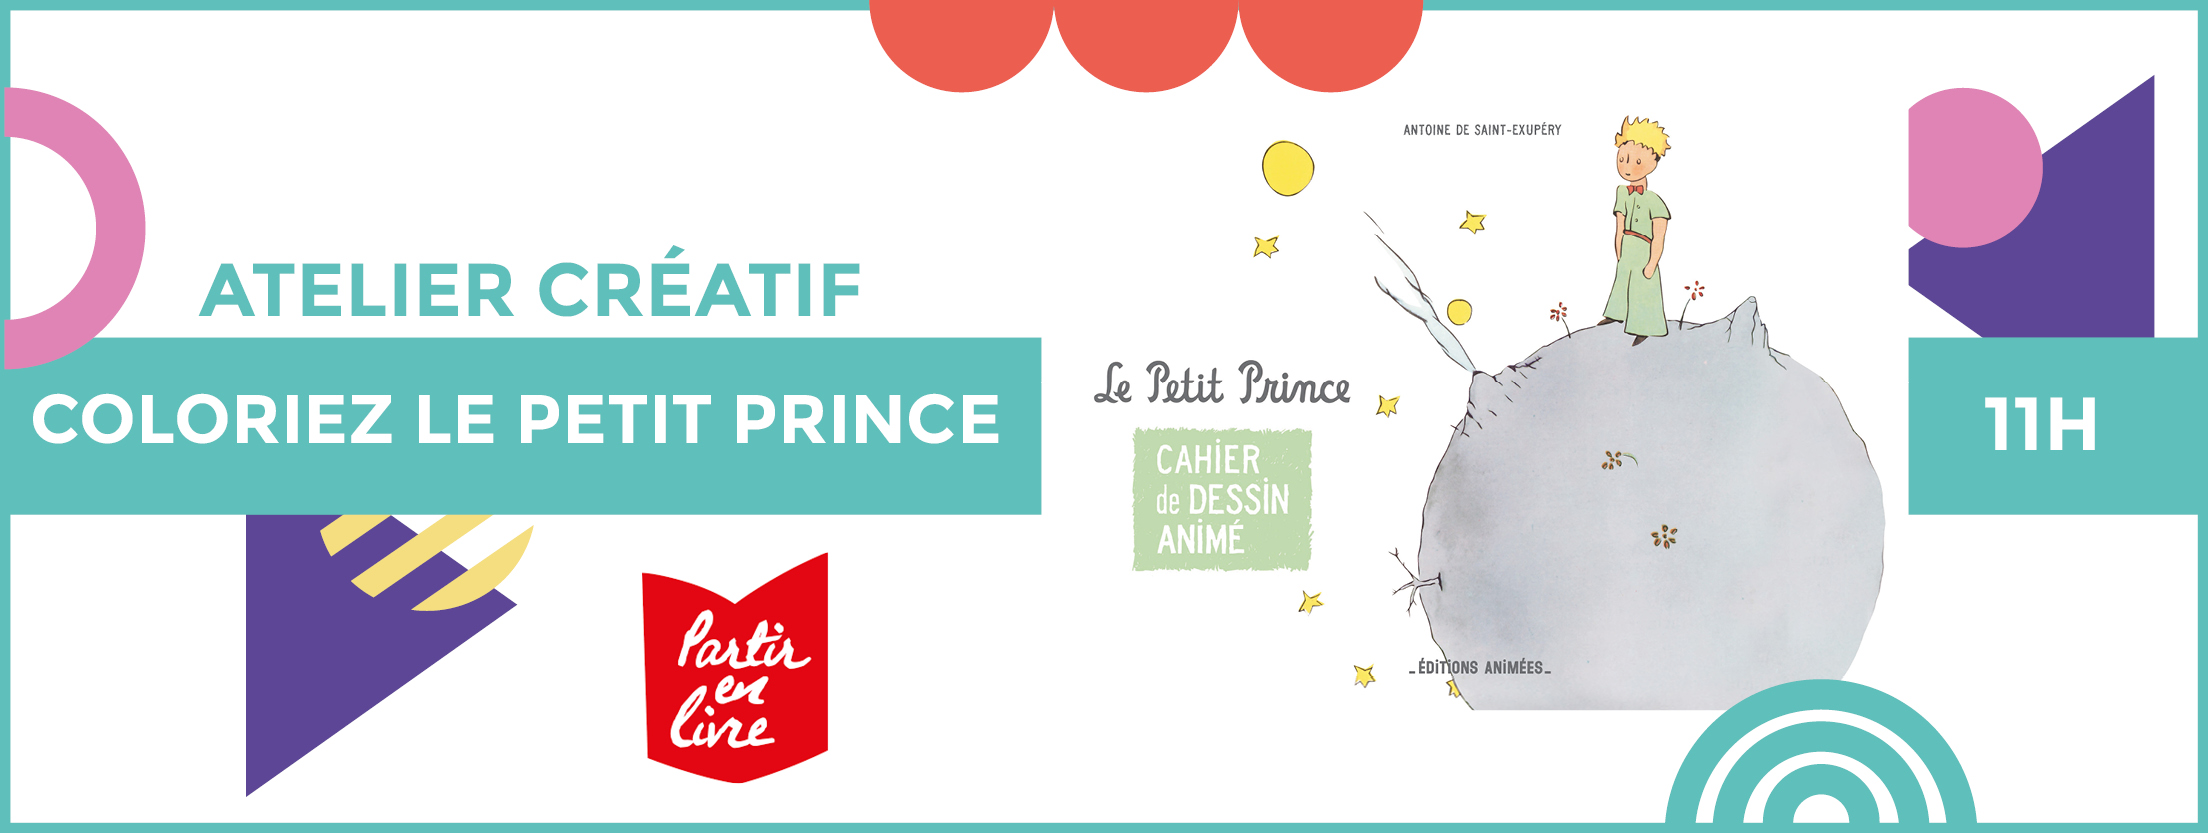 Le Petit Prince - Cahier de dessin animé